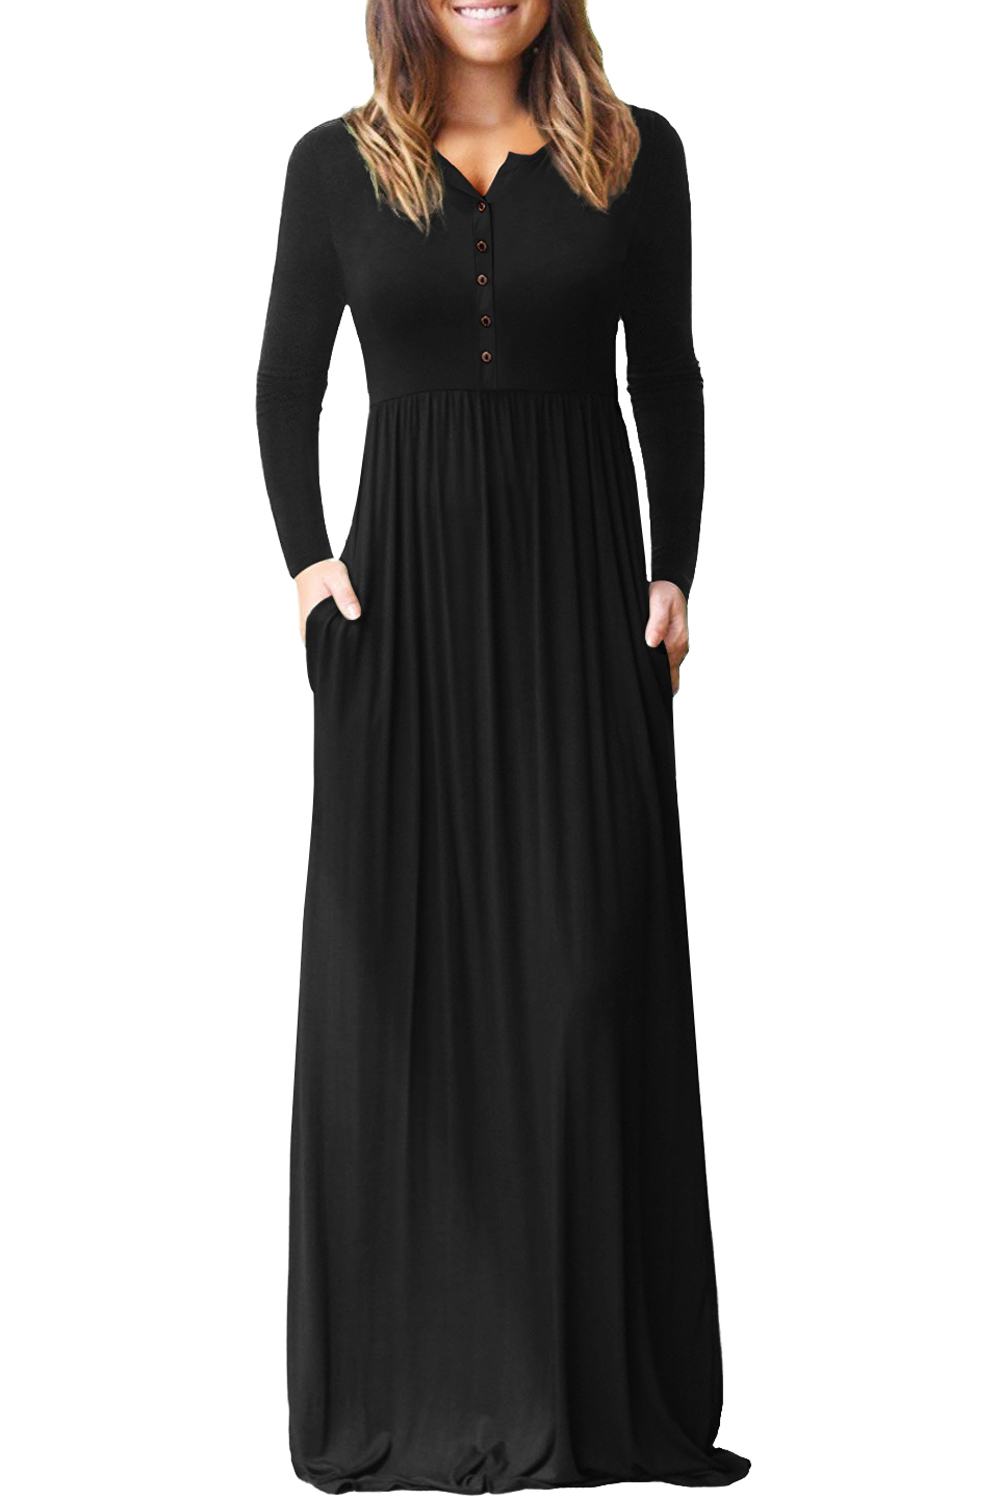 Black Long Sleeve Button Down Casual Maxi Dress Wholesale